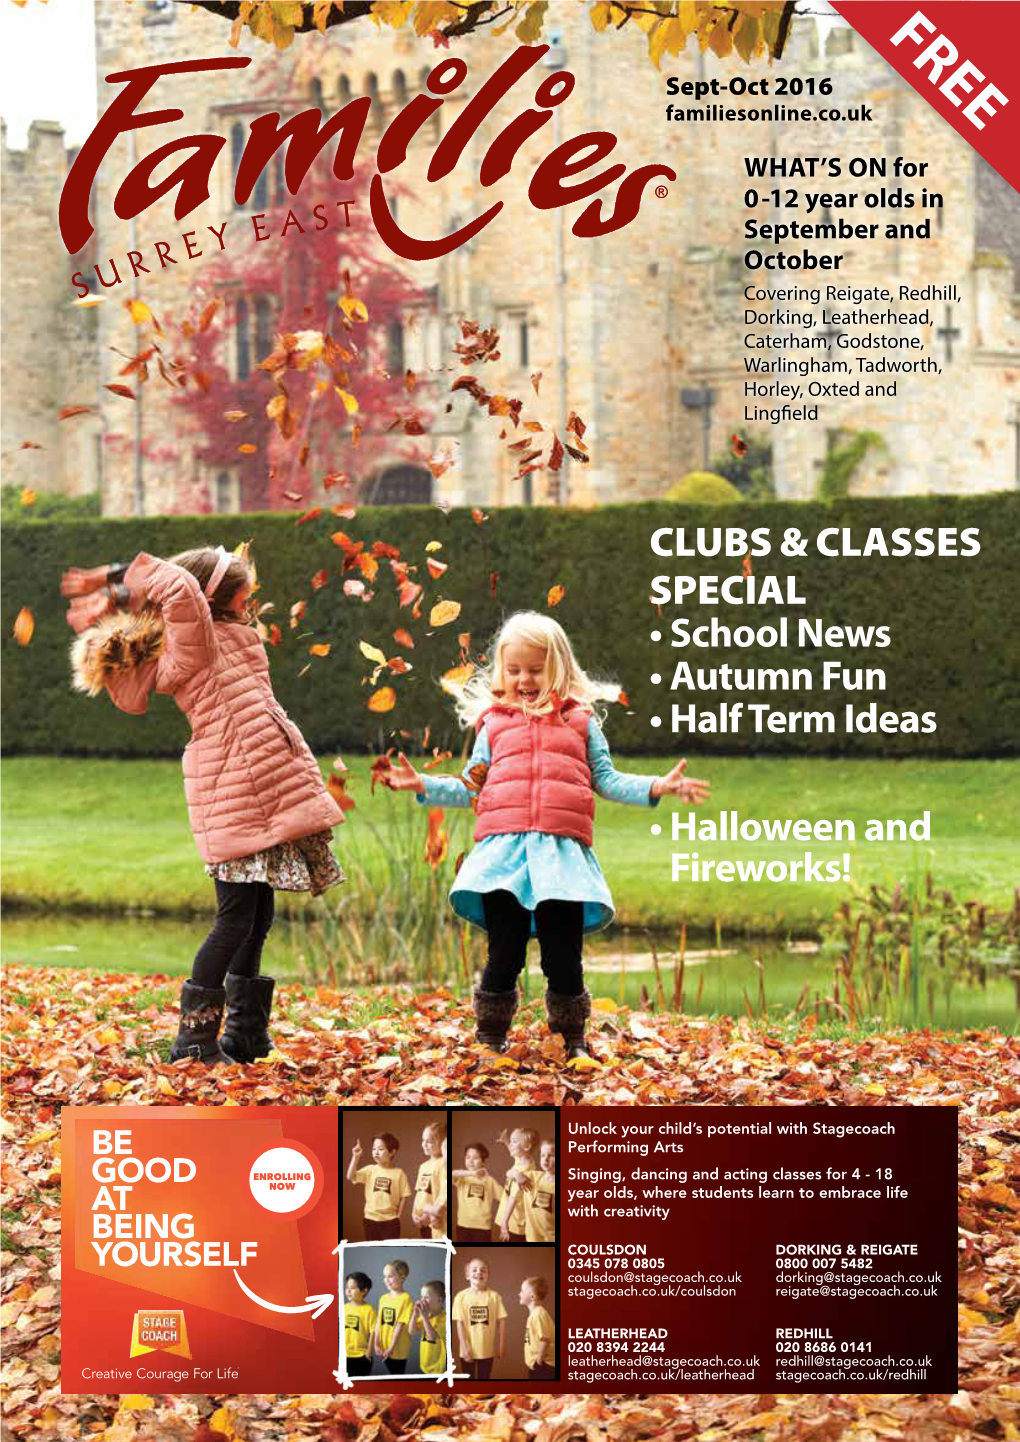 Clubs & Classes Special • School News • Autumn Fun • Half Term